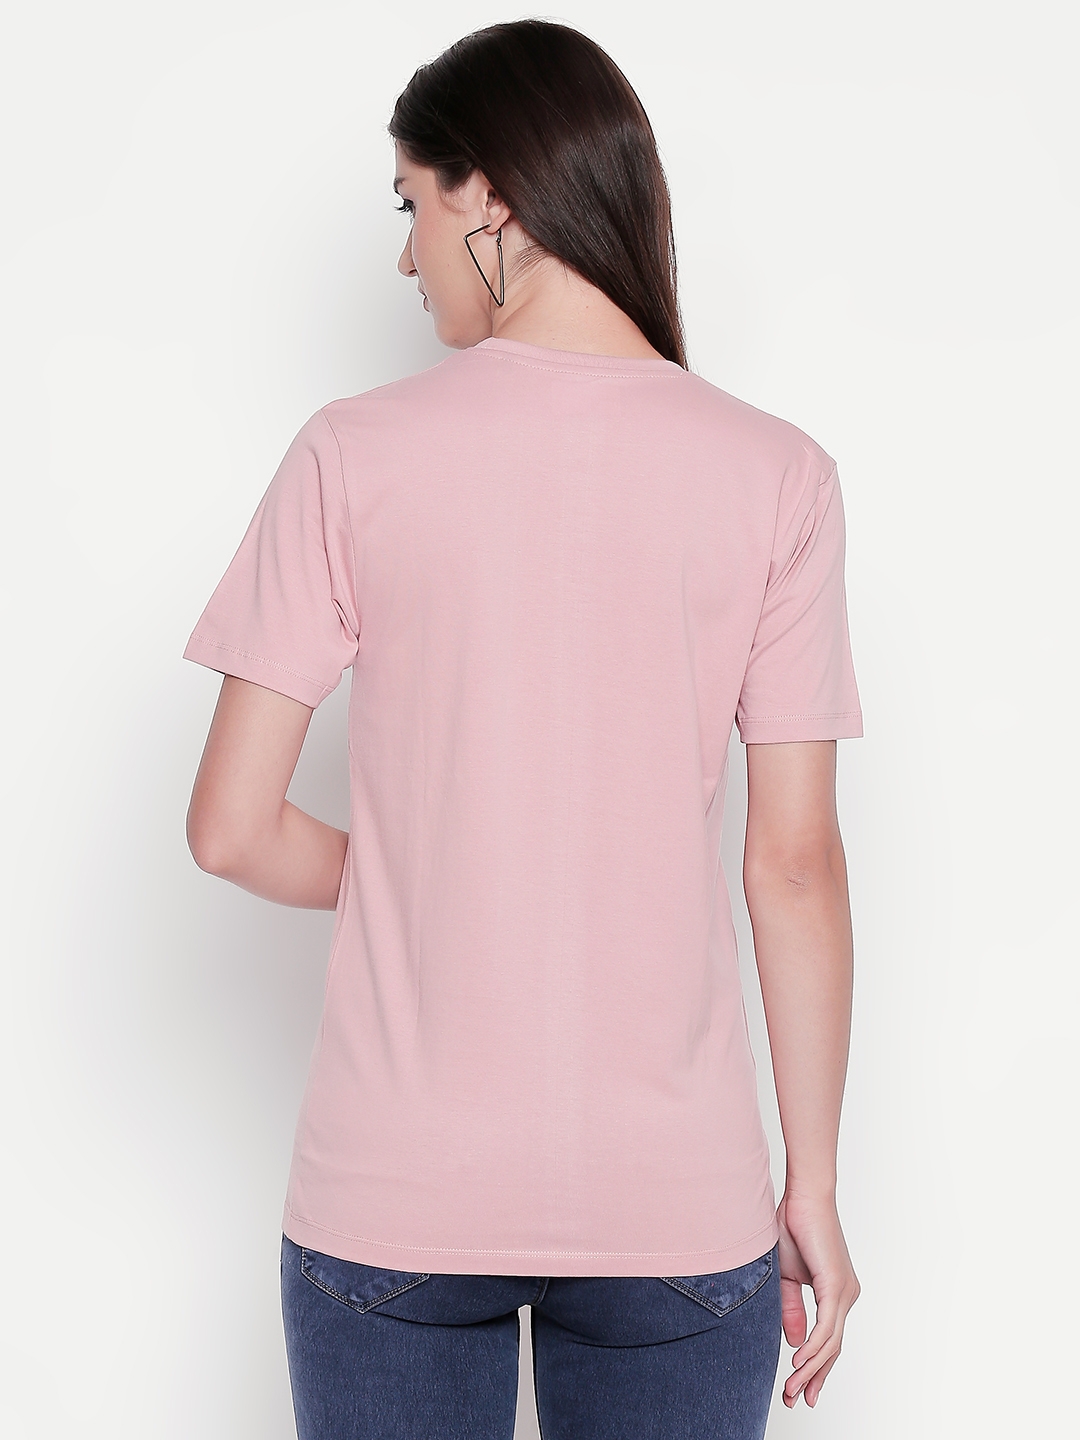 creativeideas.store | Human Being Pink Tshirt 1